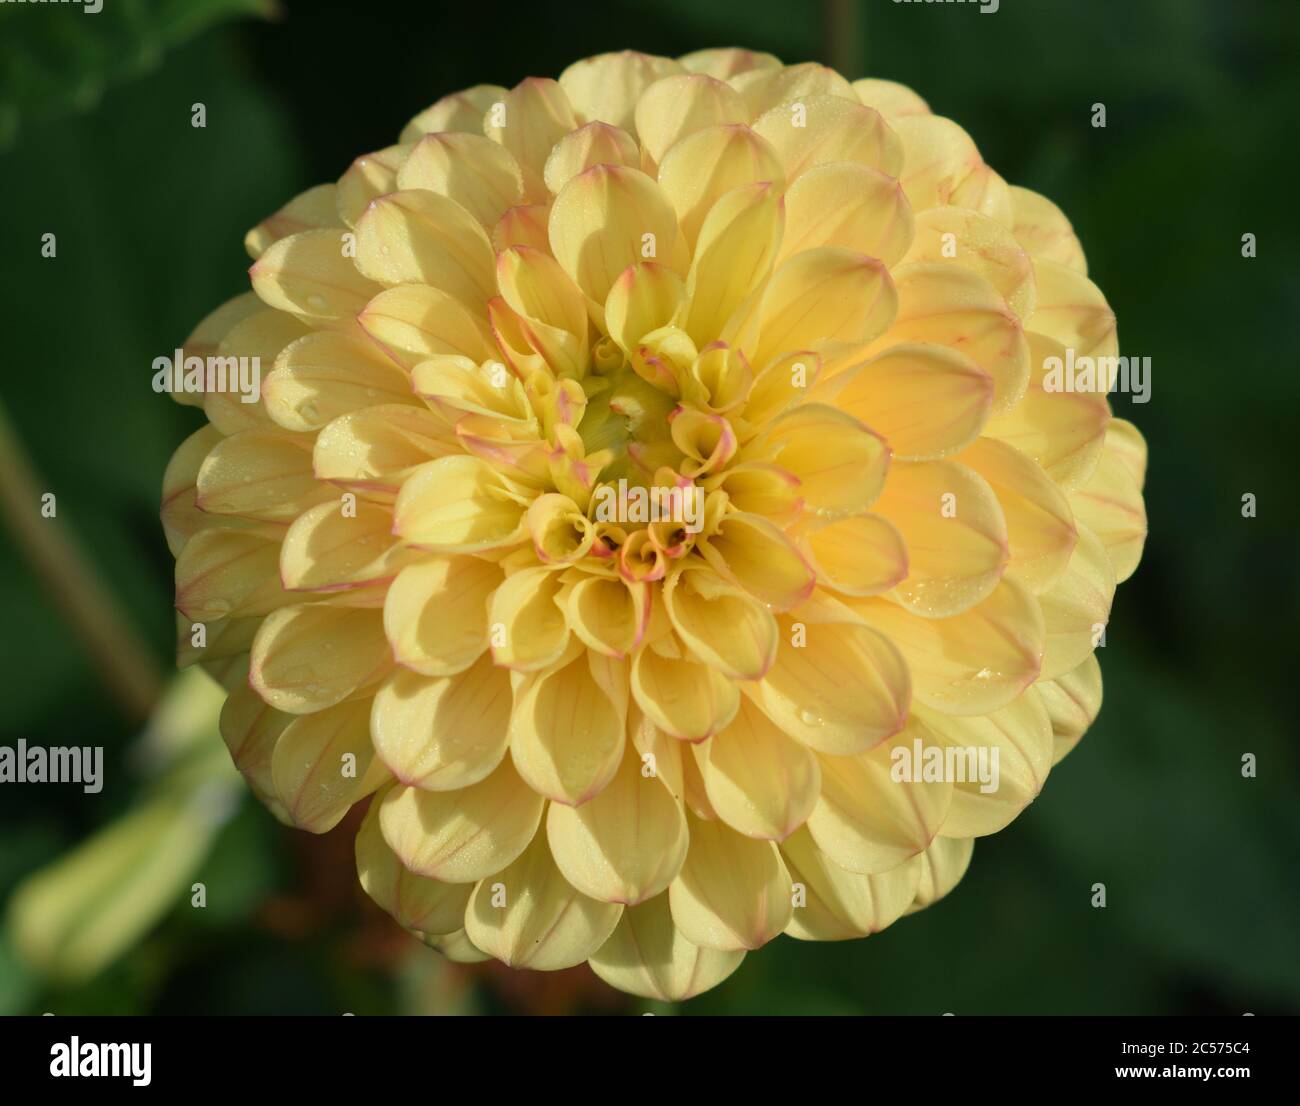 Dahlia flower with yellow ball type head Stock Photo